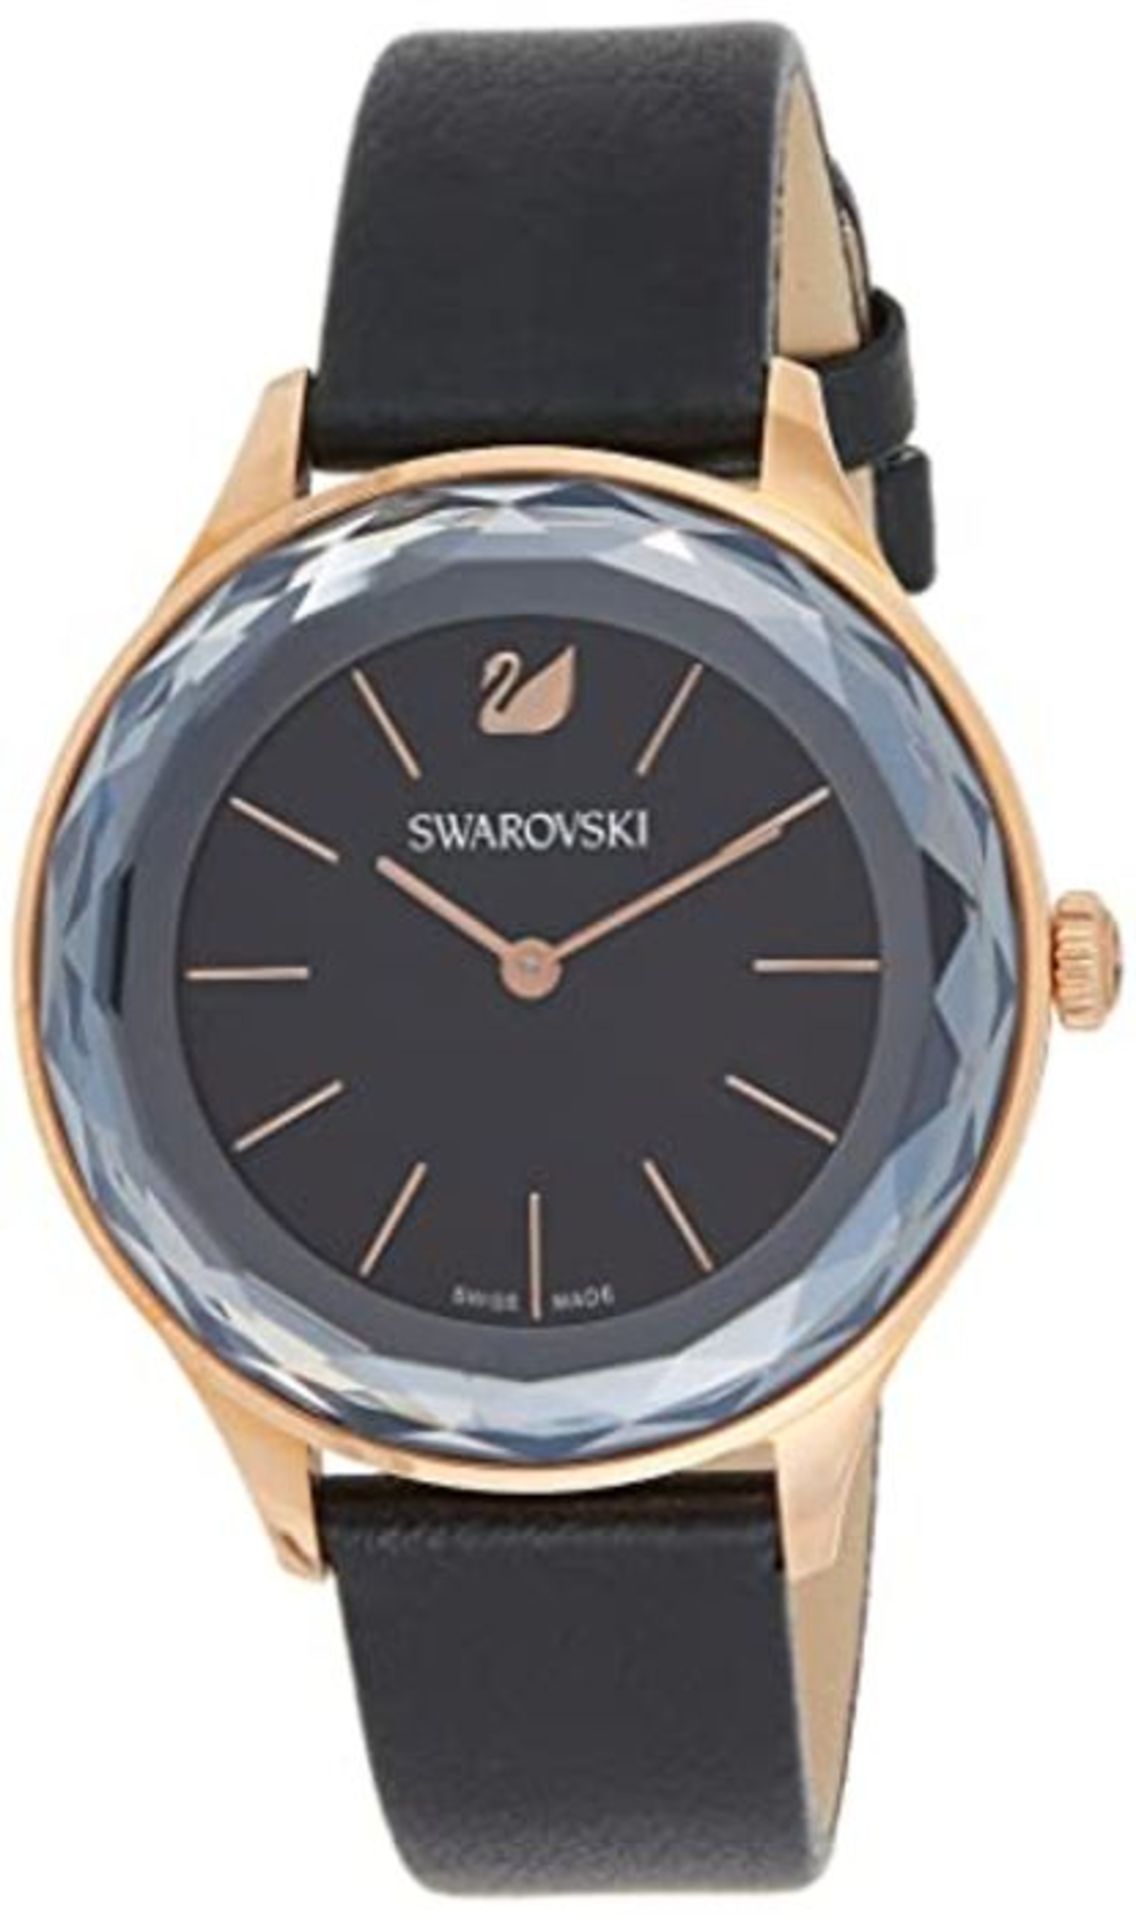 RRP £229.00 Swarovski Octea Nova Uhr, Damenuhr mit RosÃ© Vergoldetem GehÃ¤use, Schwarzem Ziffe